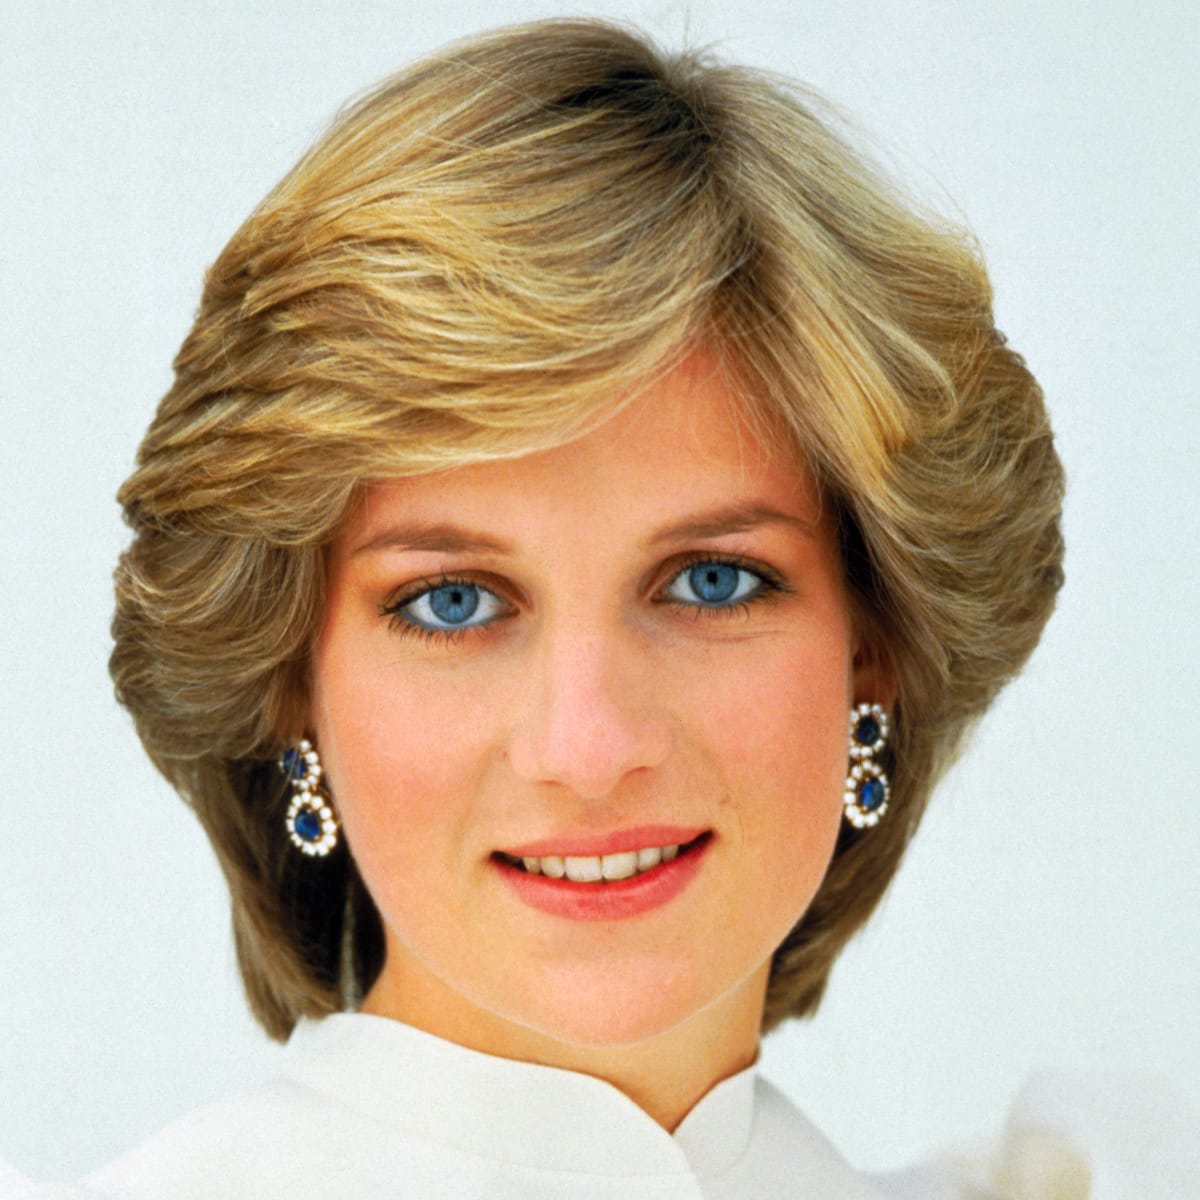 AstroBiography: Astrology of Princess Diana